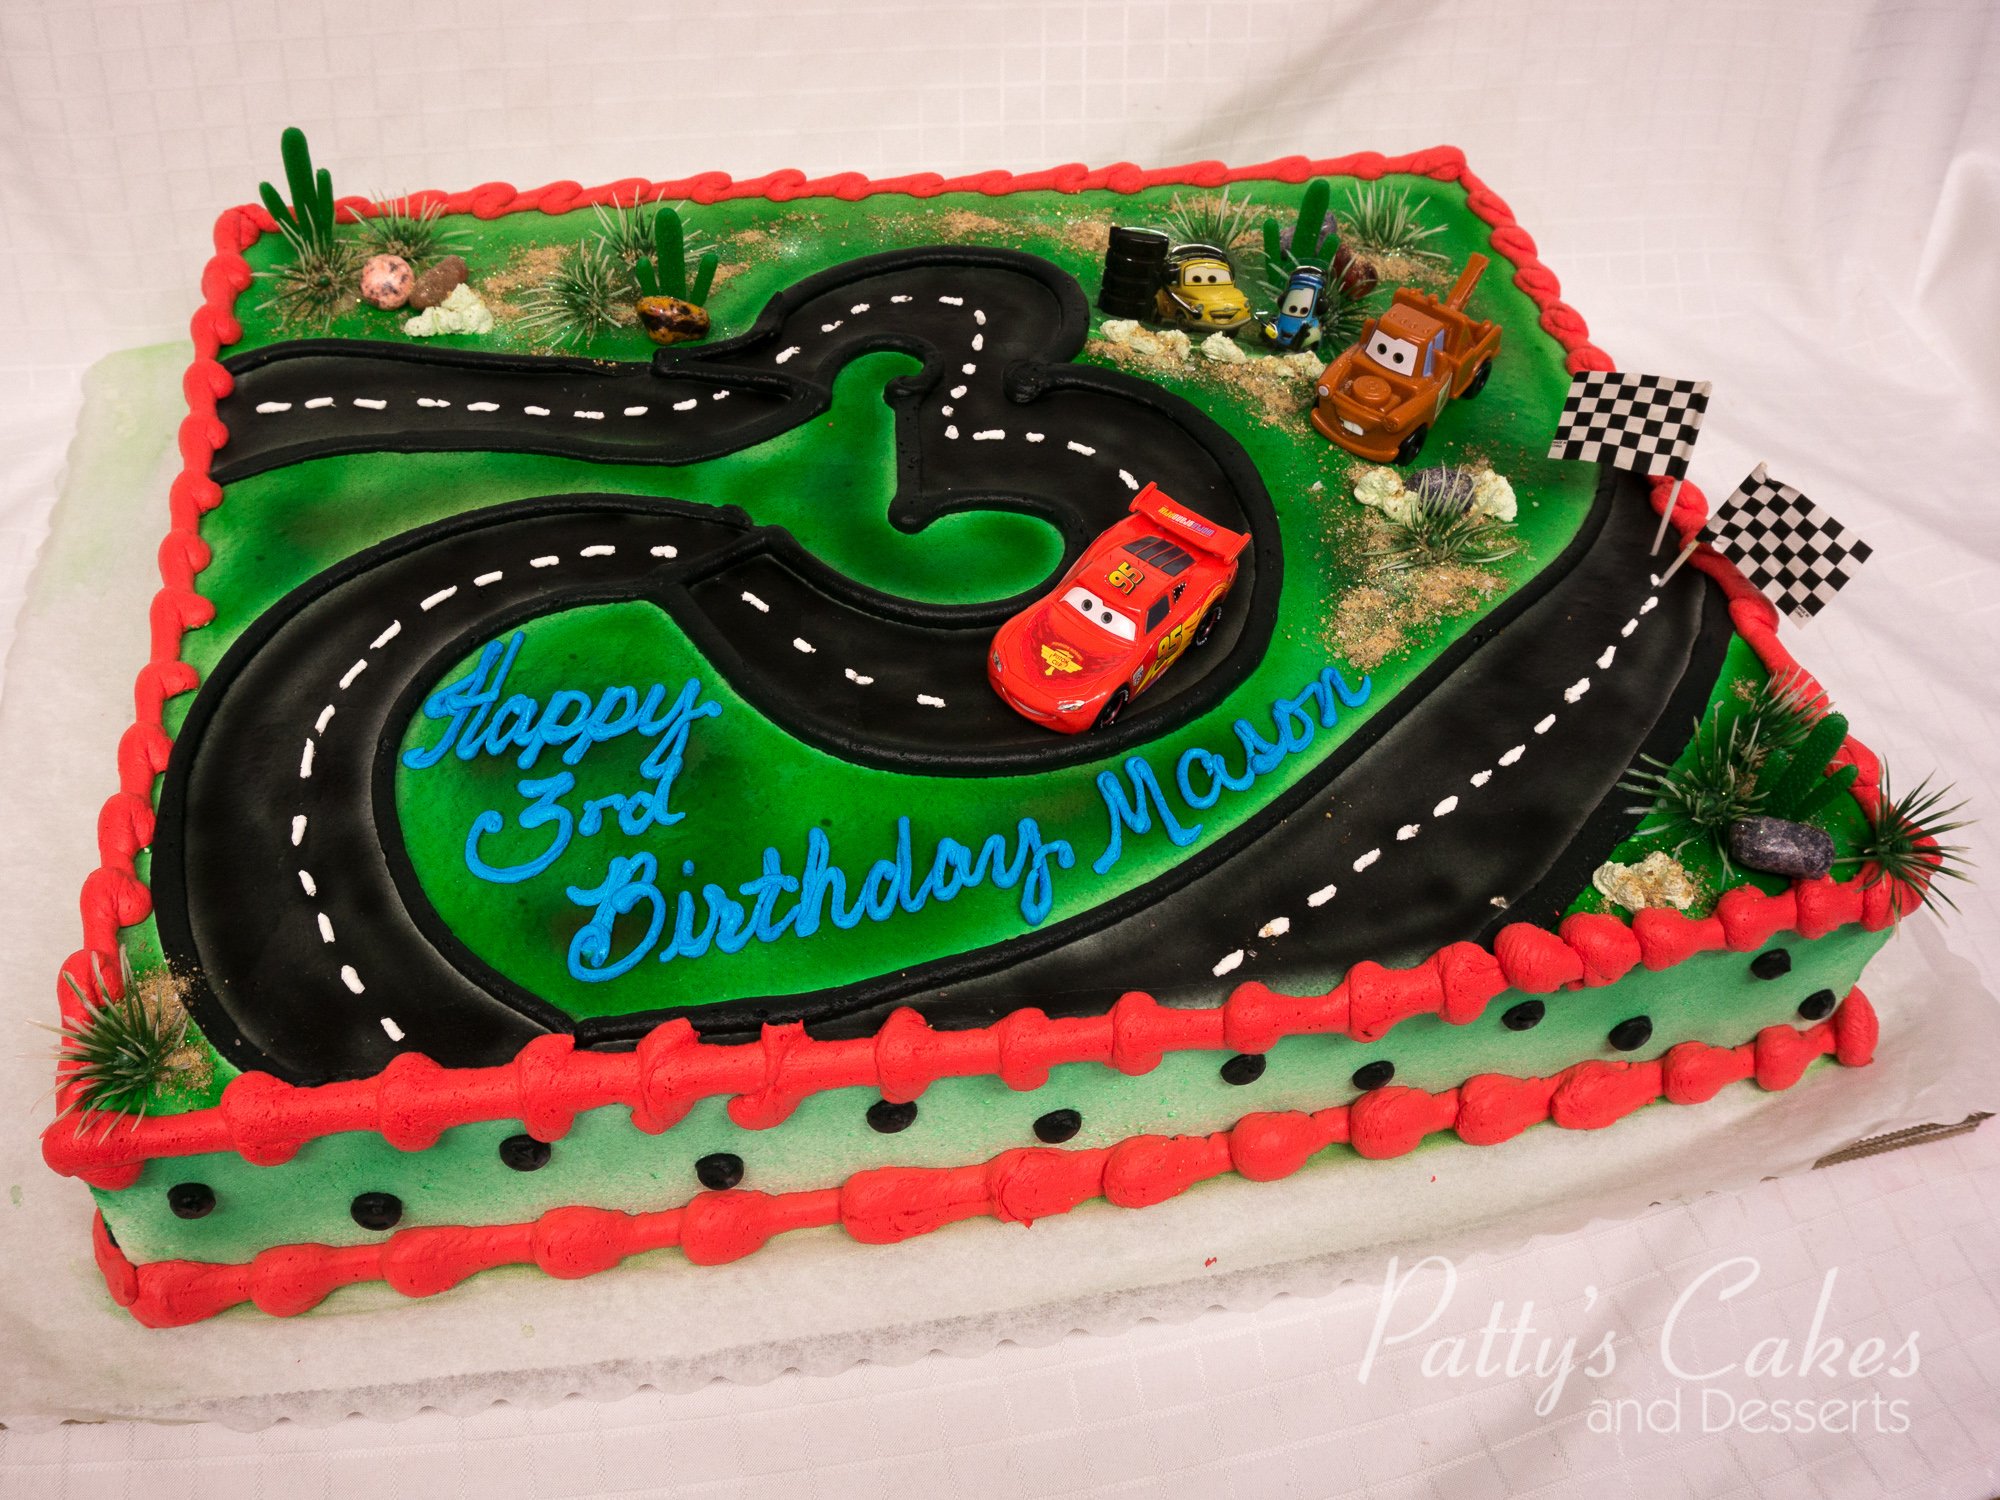 Cars birthday cake, Disney cars birthday, Disney cars cake